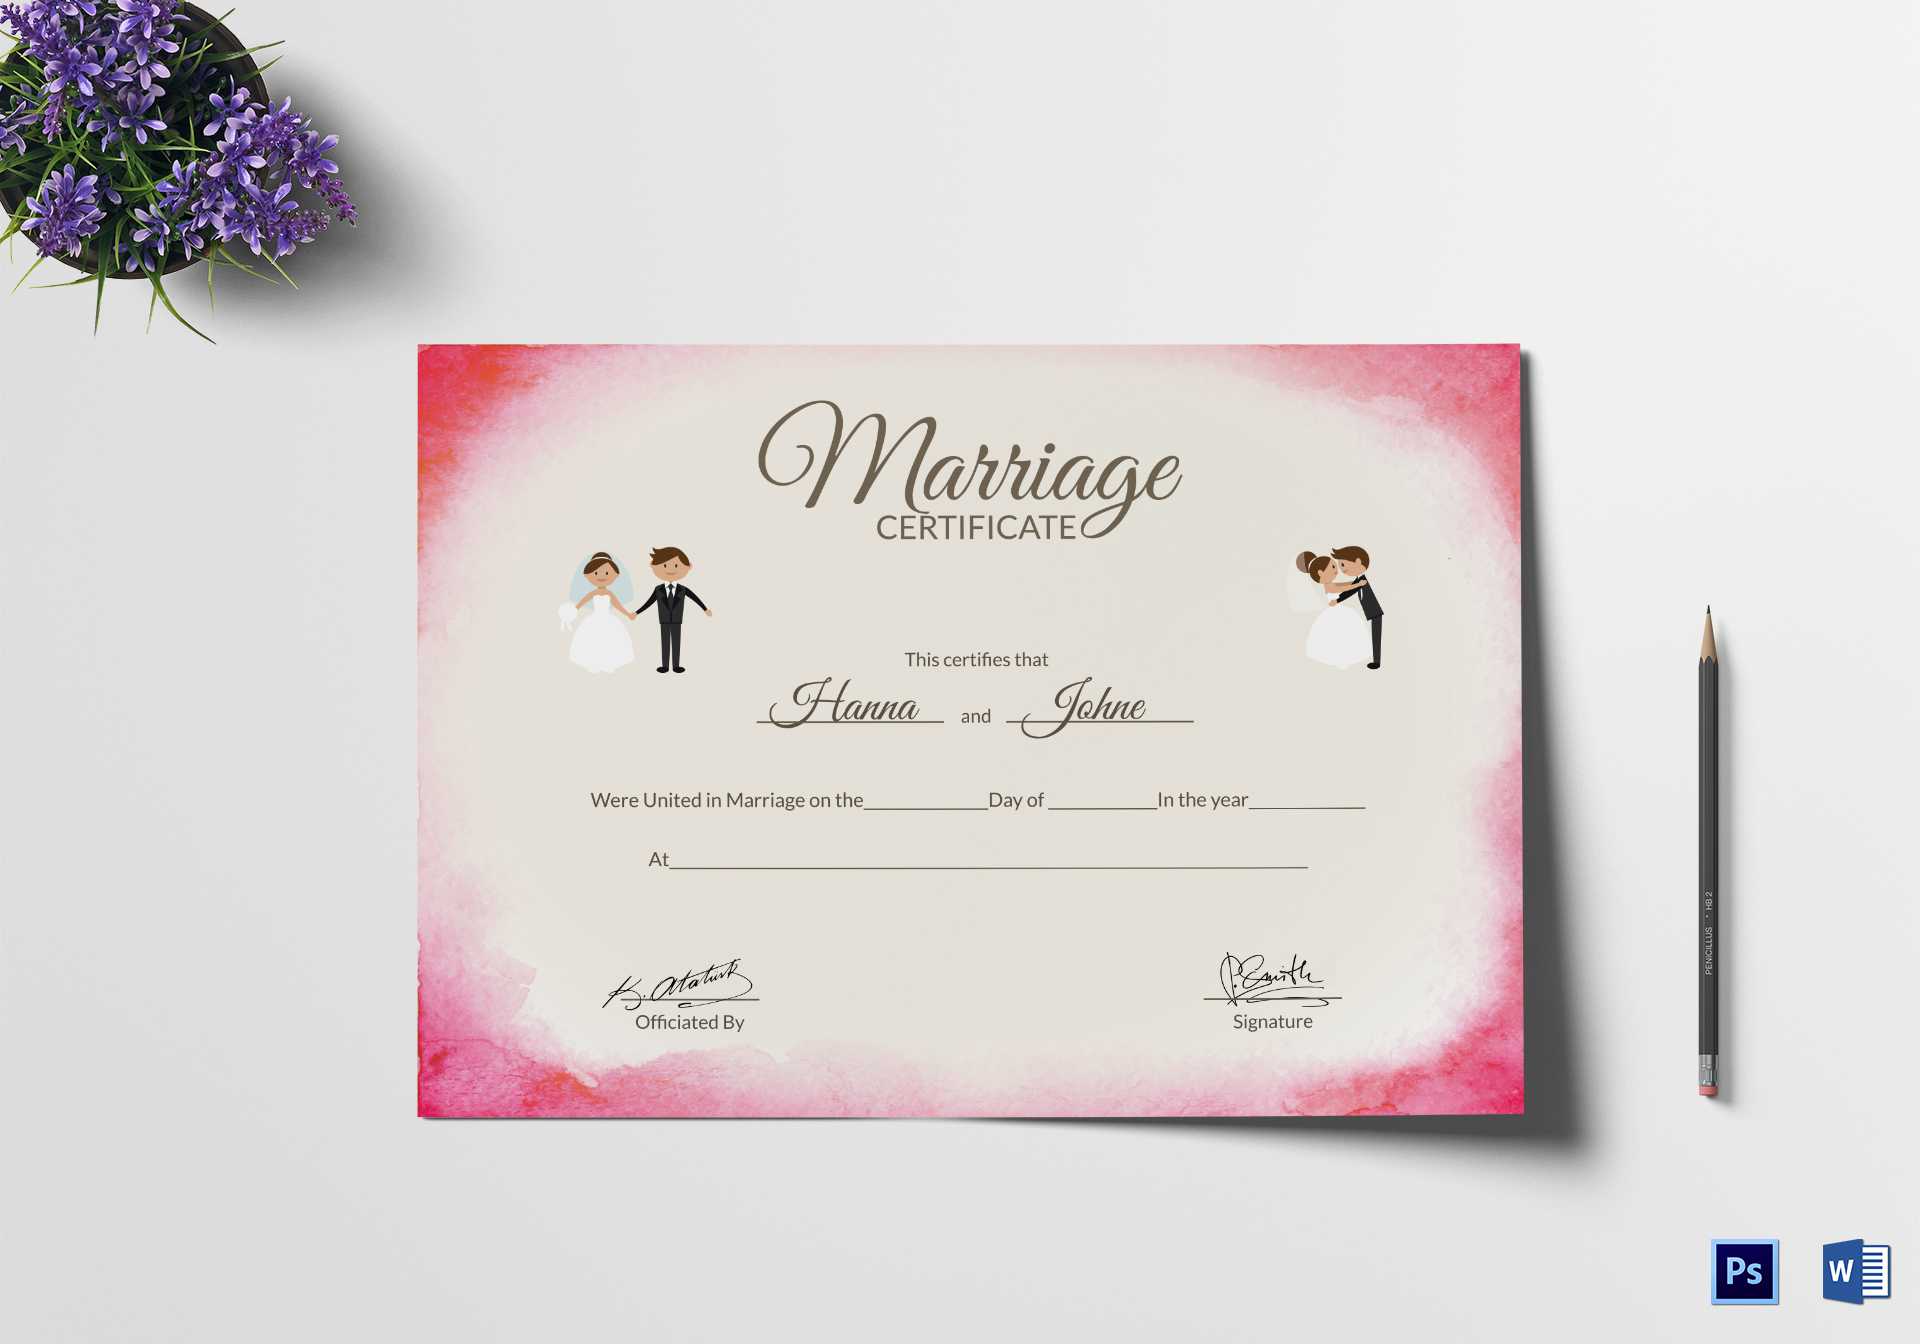 Elegant Marriage Certificate Template Regarding Certificate Of Marriage Template